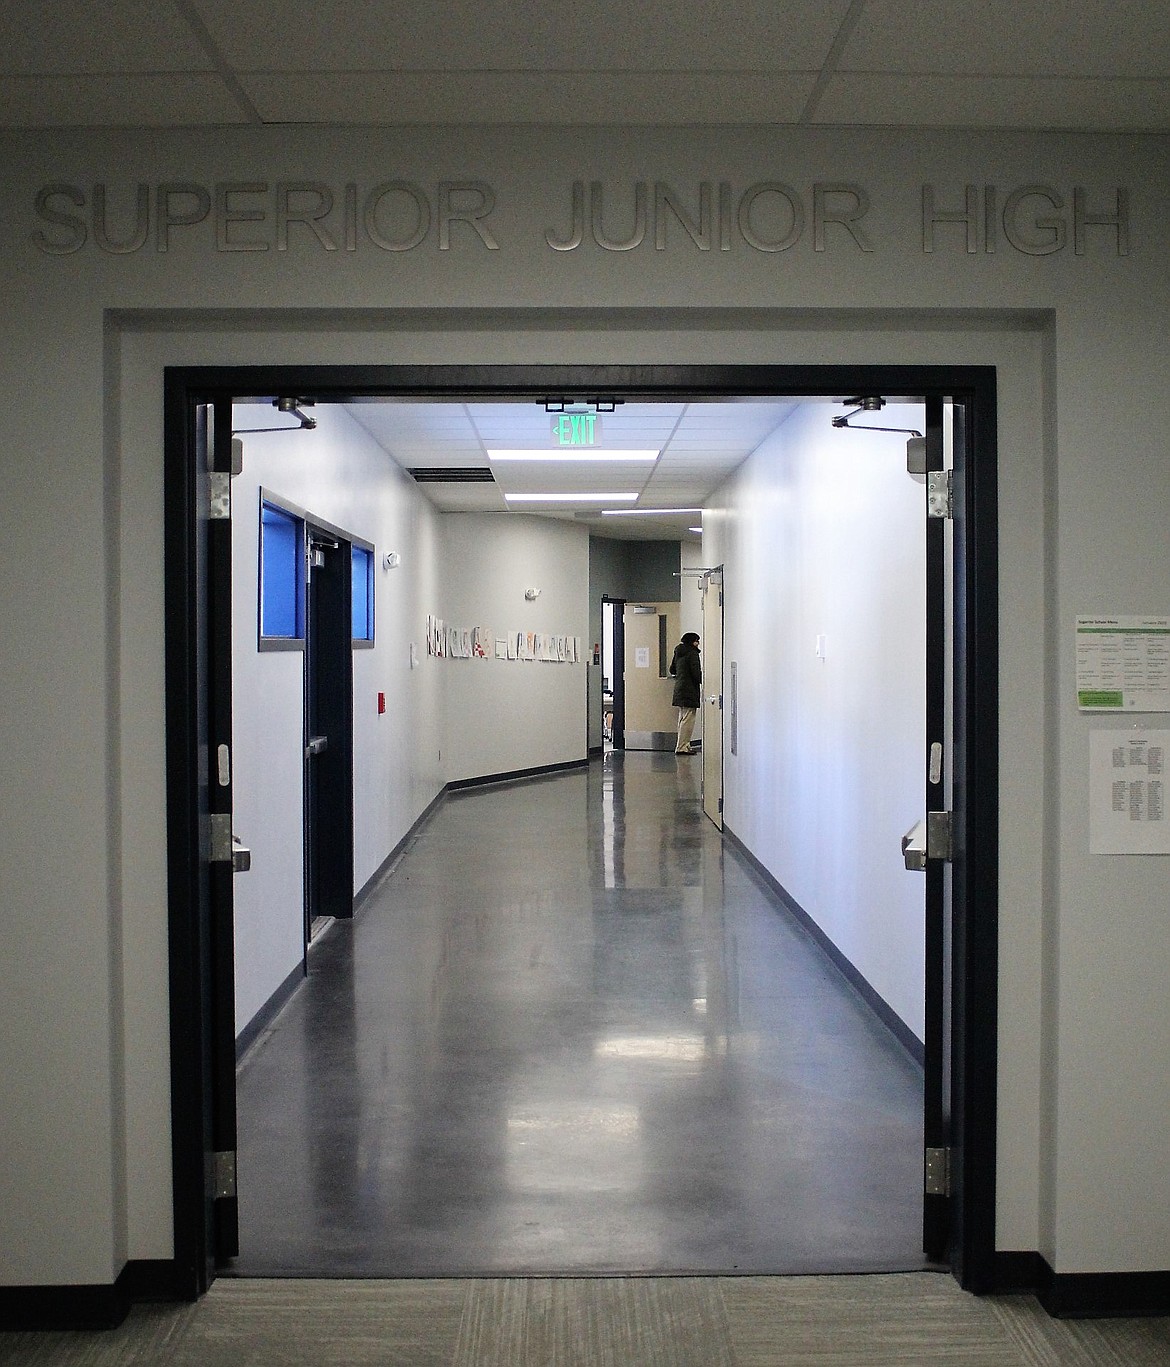 Classes began in the new Superior Junior High School in December, 2018.